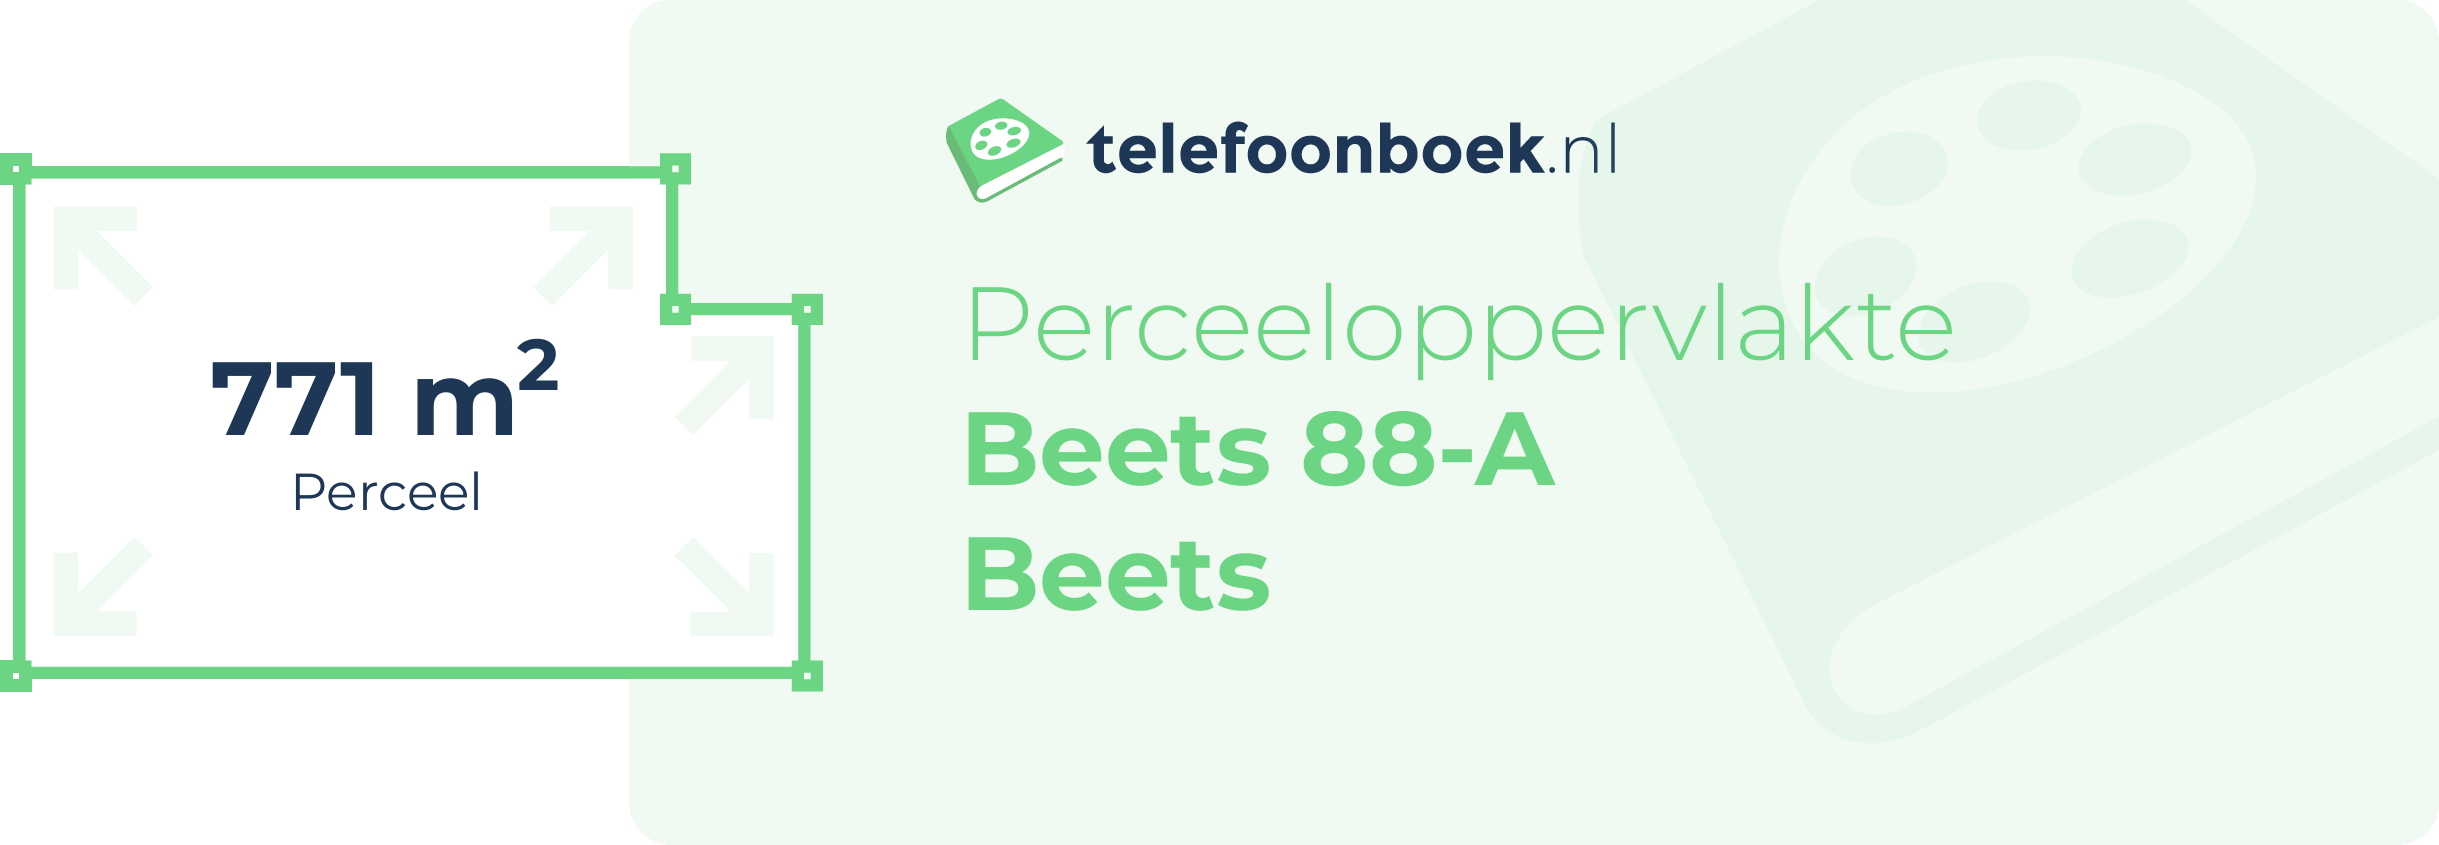 Perceeloppervlakte Beets 88-A Beets